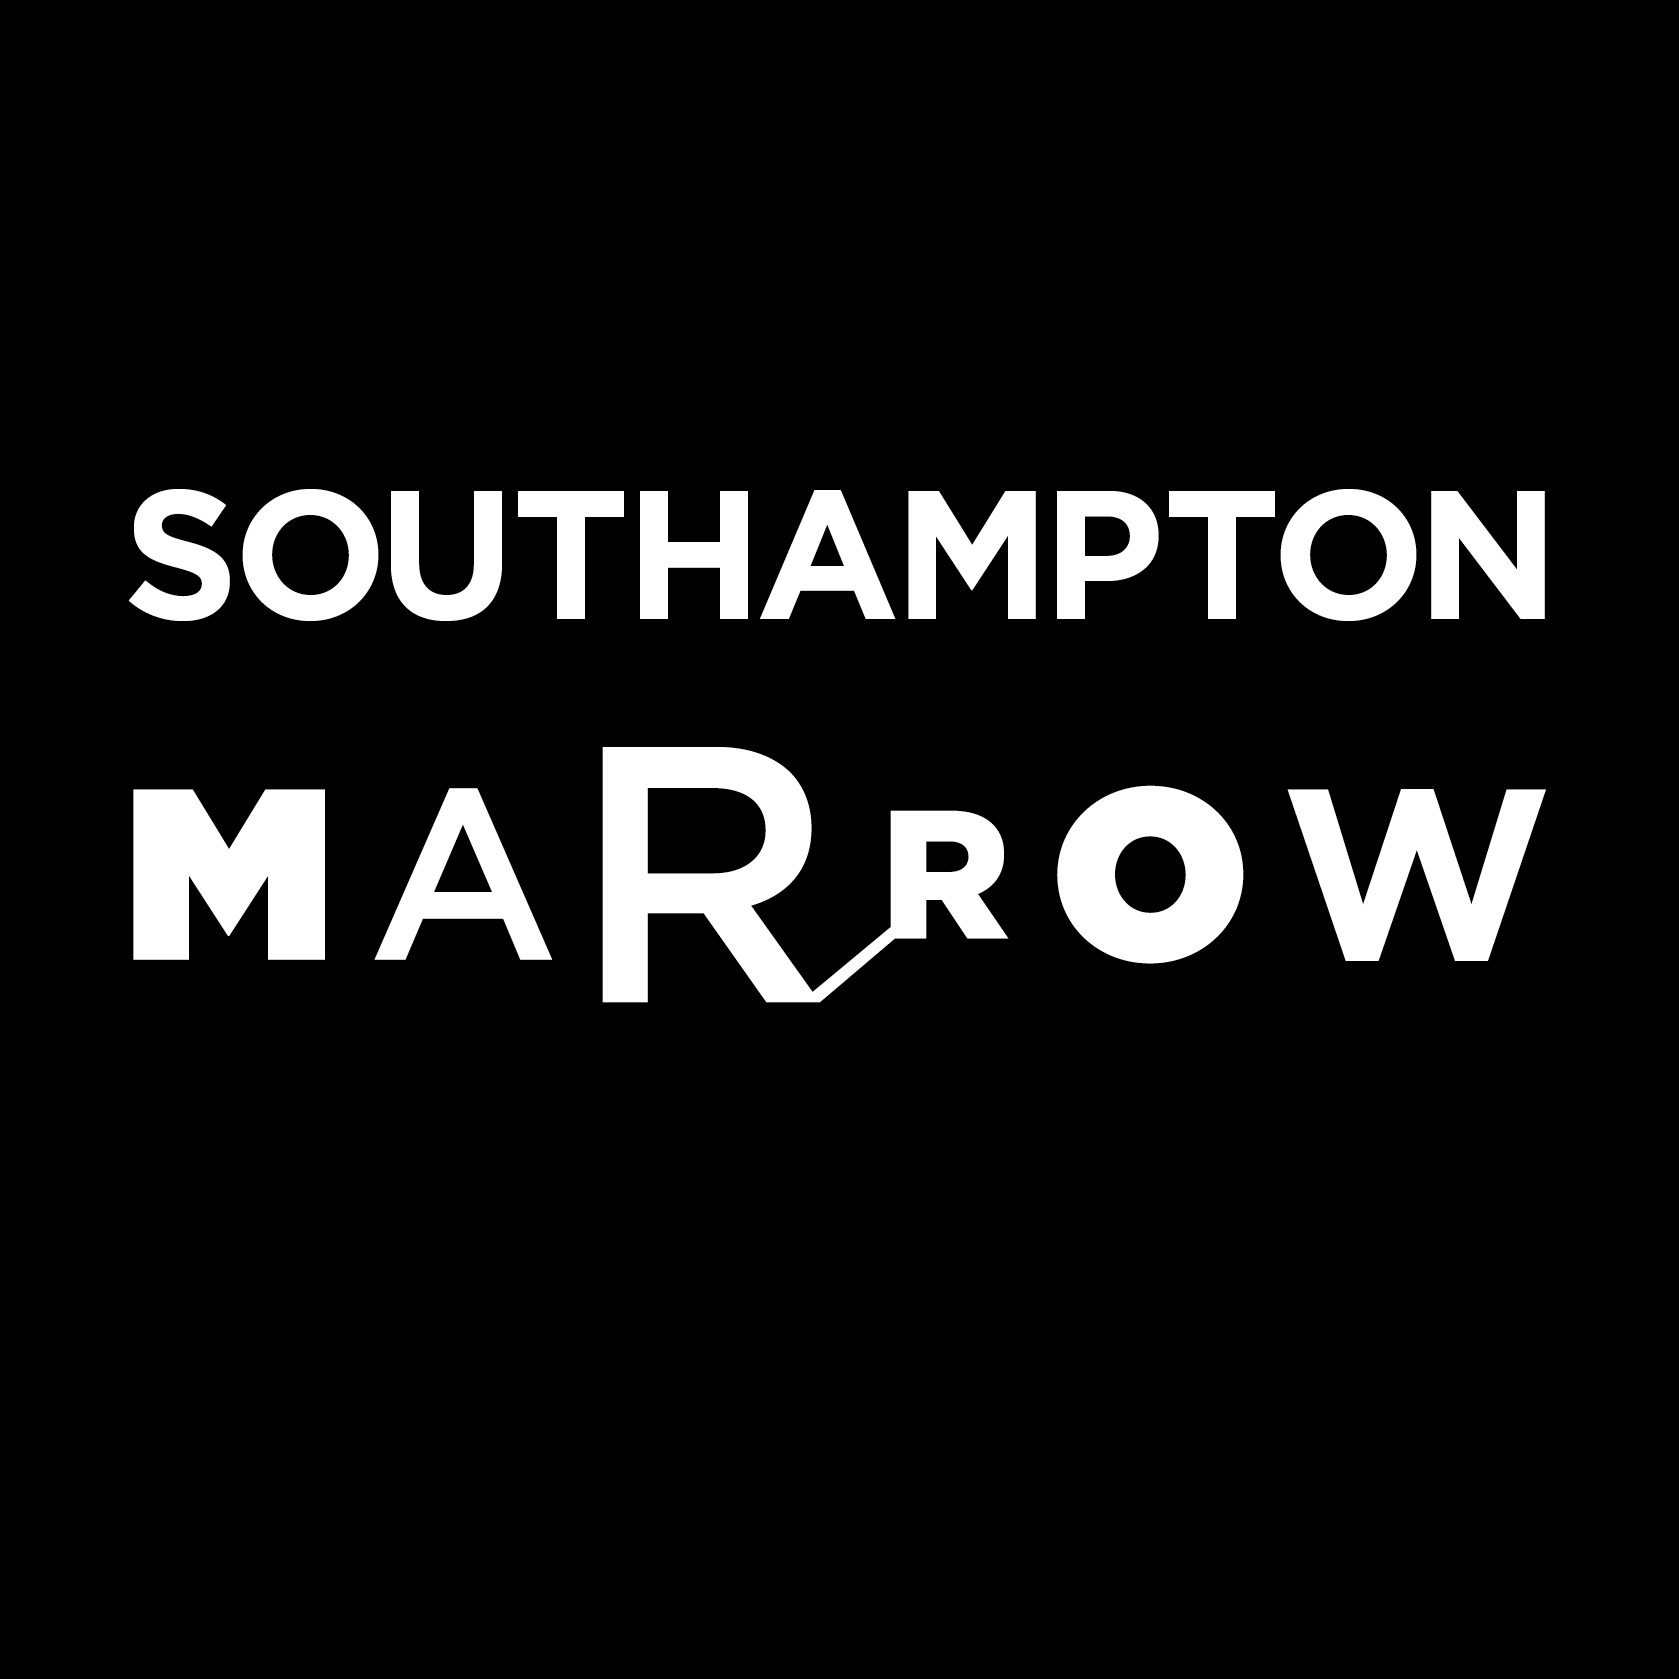 Southampton Marrow